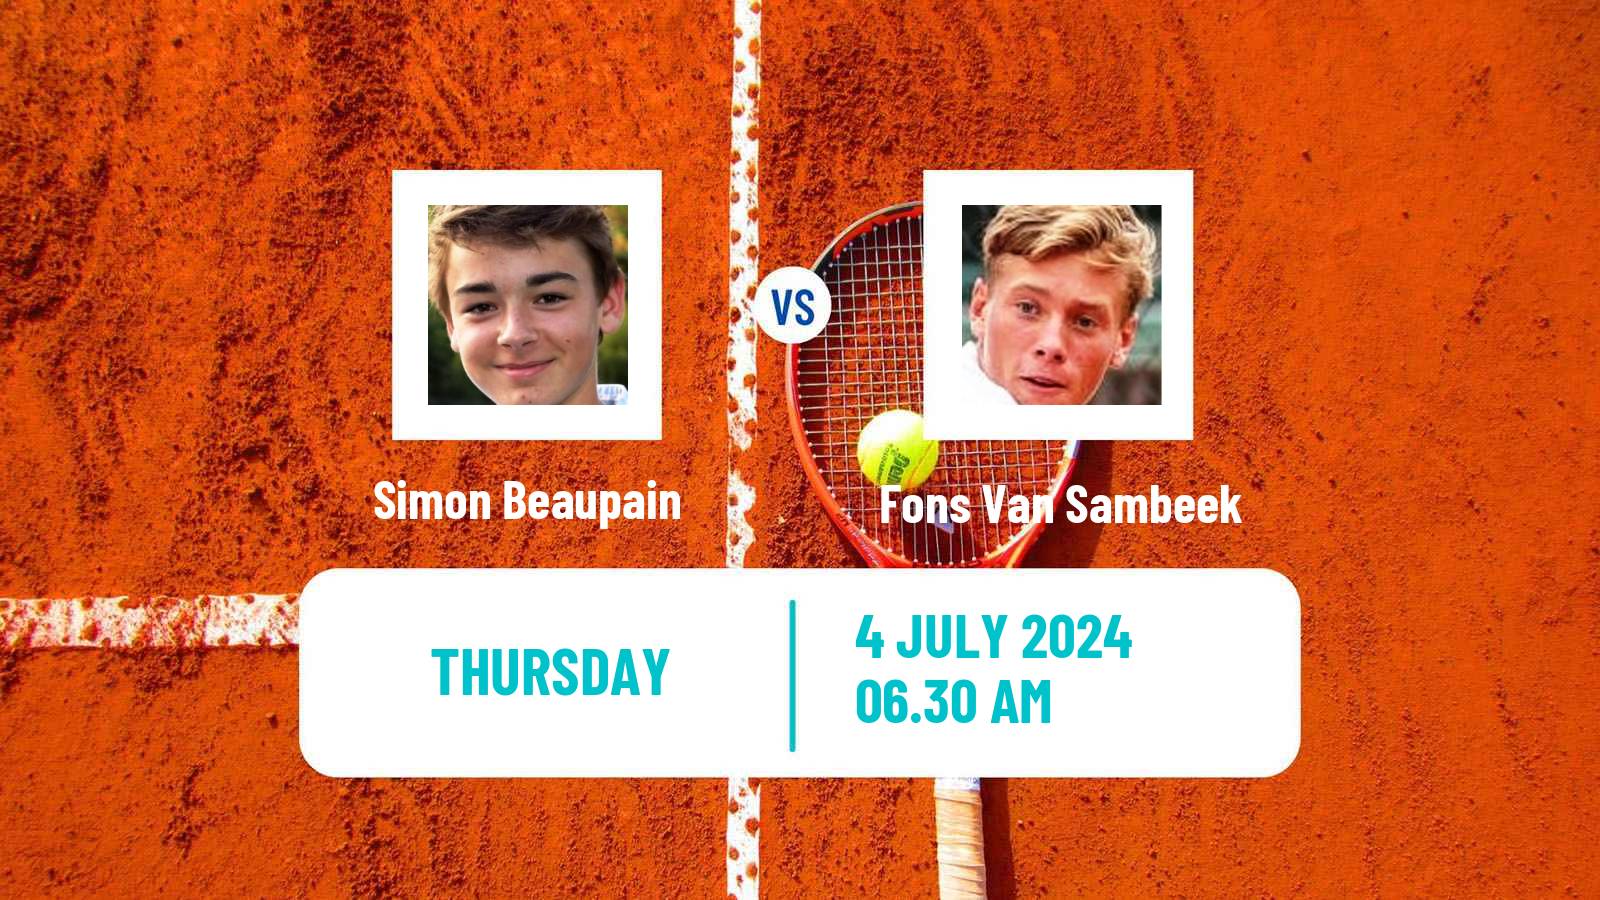 Tennis ITF M15 Amstelveen Men Simon Beaupain - Fons Van Sambeek